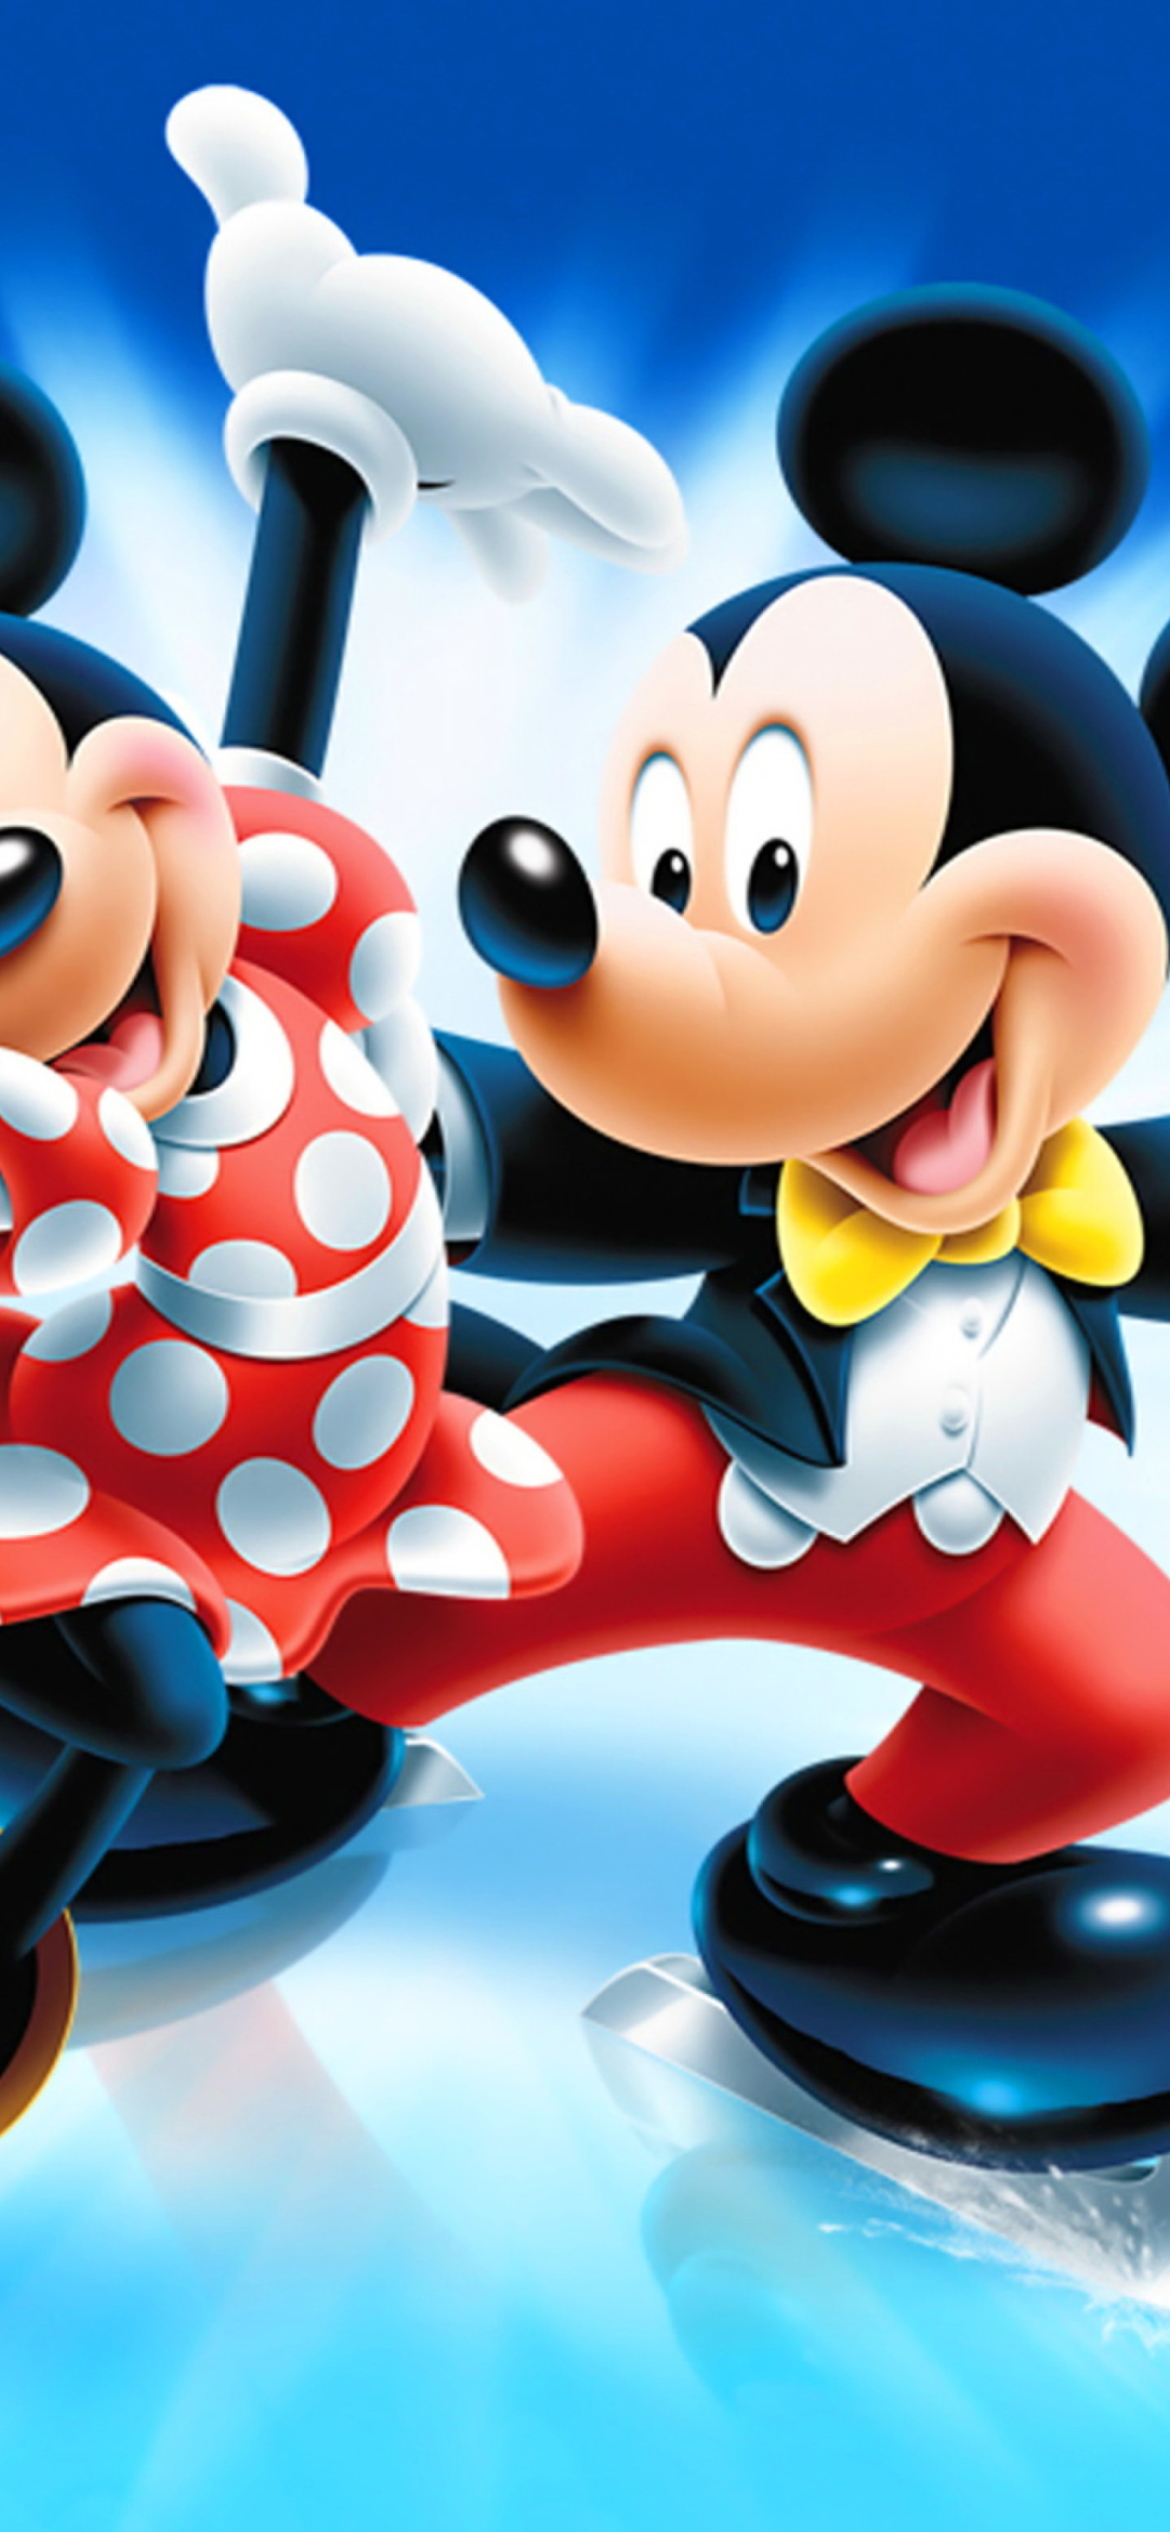 50+] Wallpaper Mickey Mouse for iPhone - WallpaperSafari